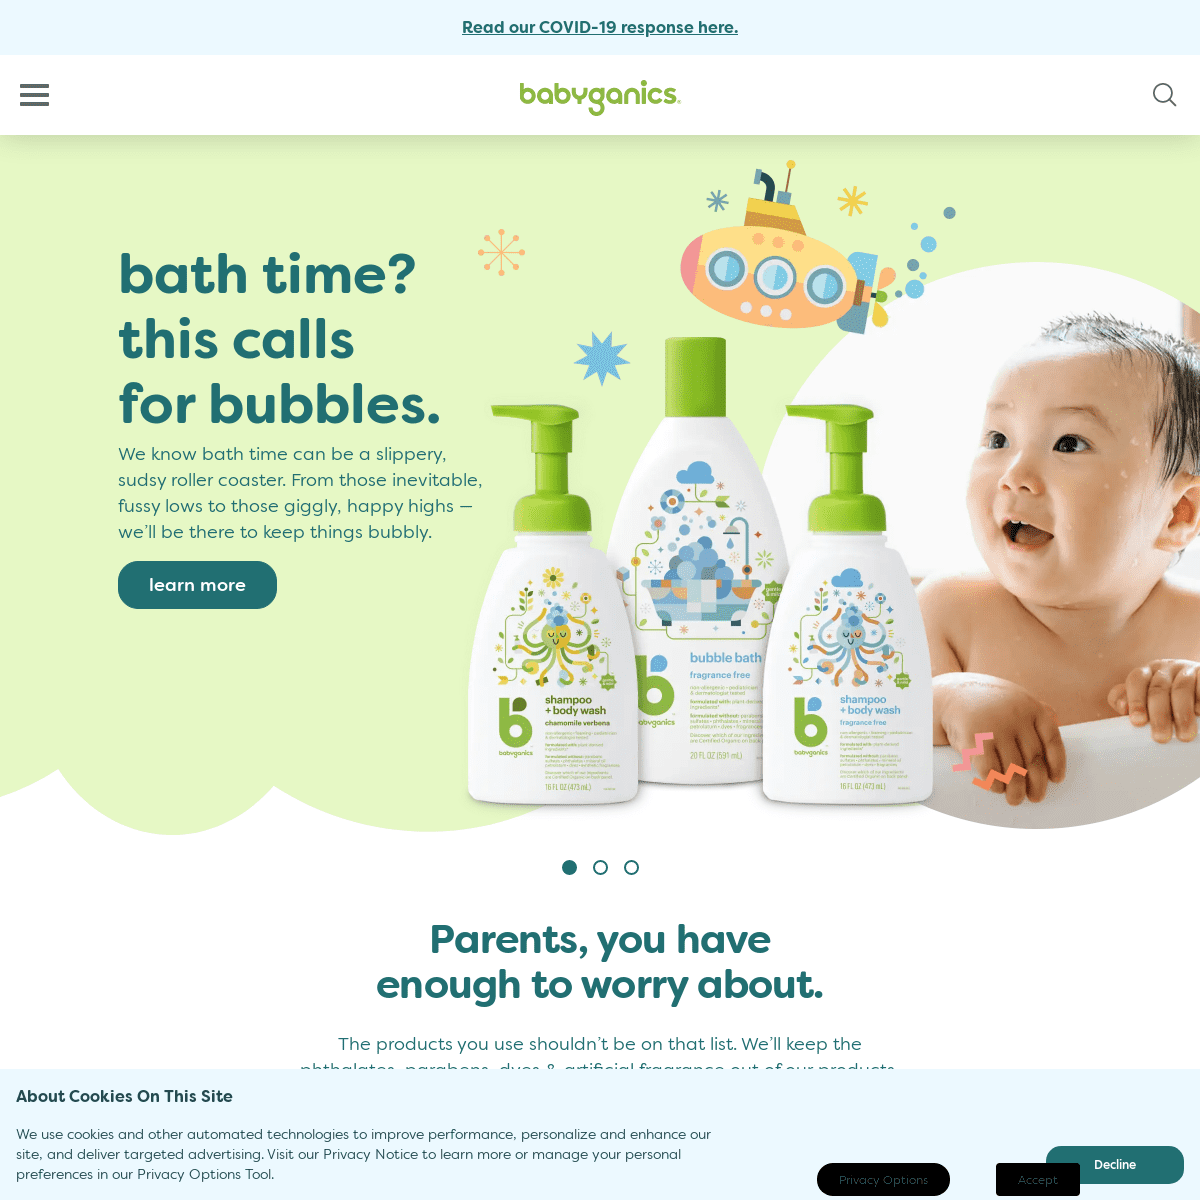 A complete backup of https://babyganics.com